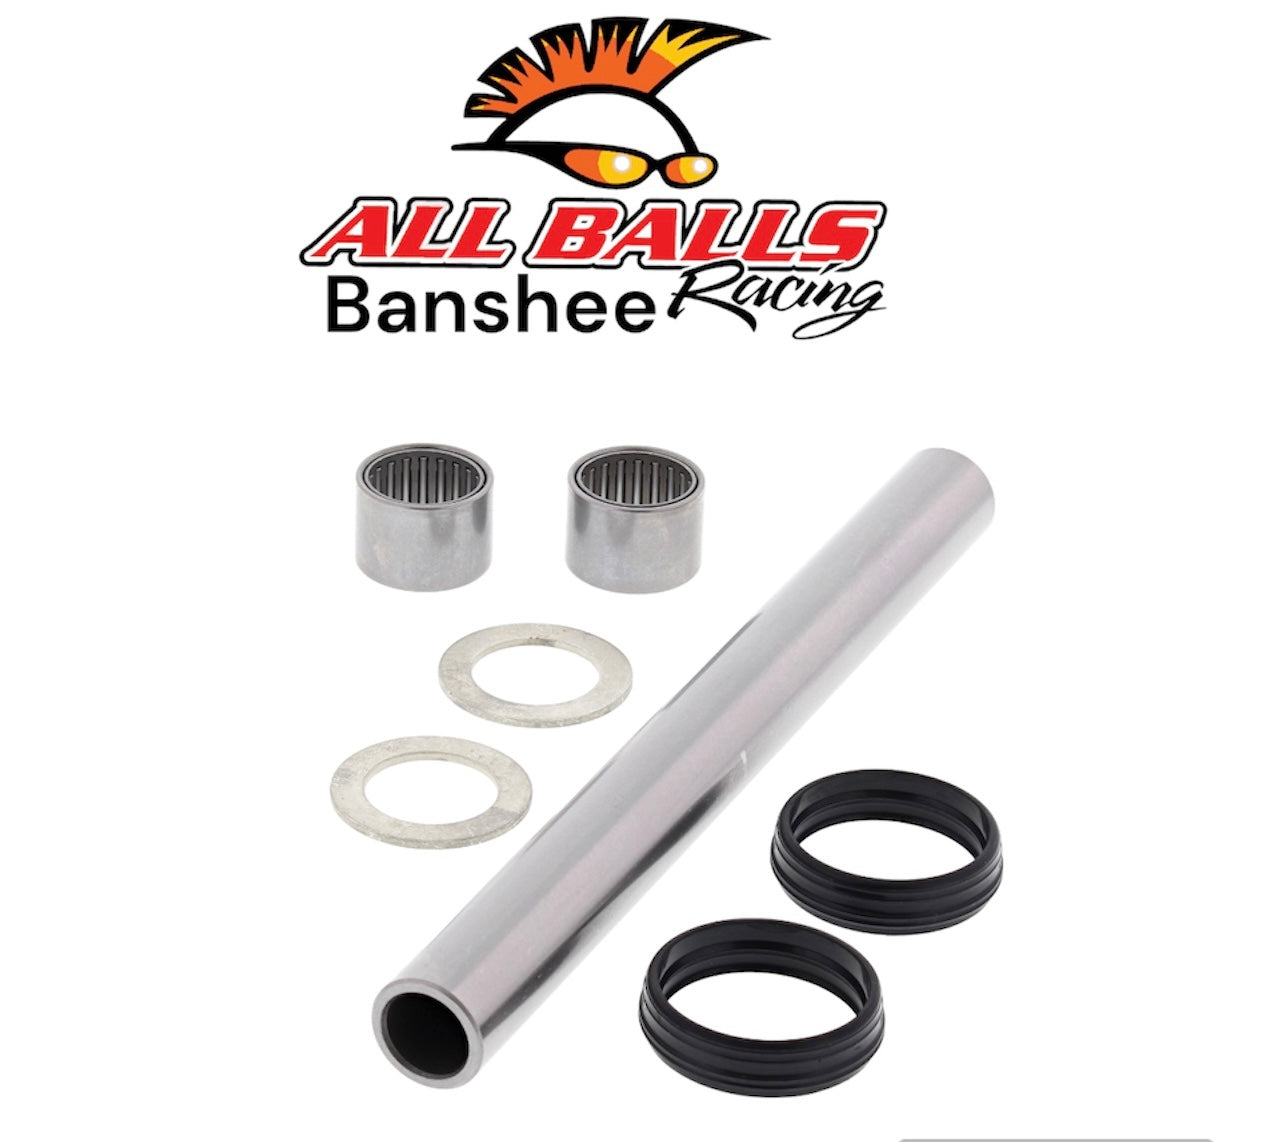 Banshee swingarm kit